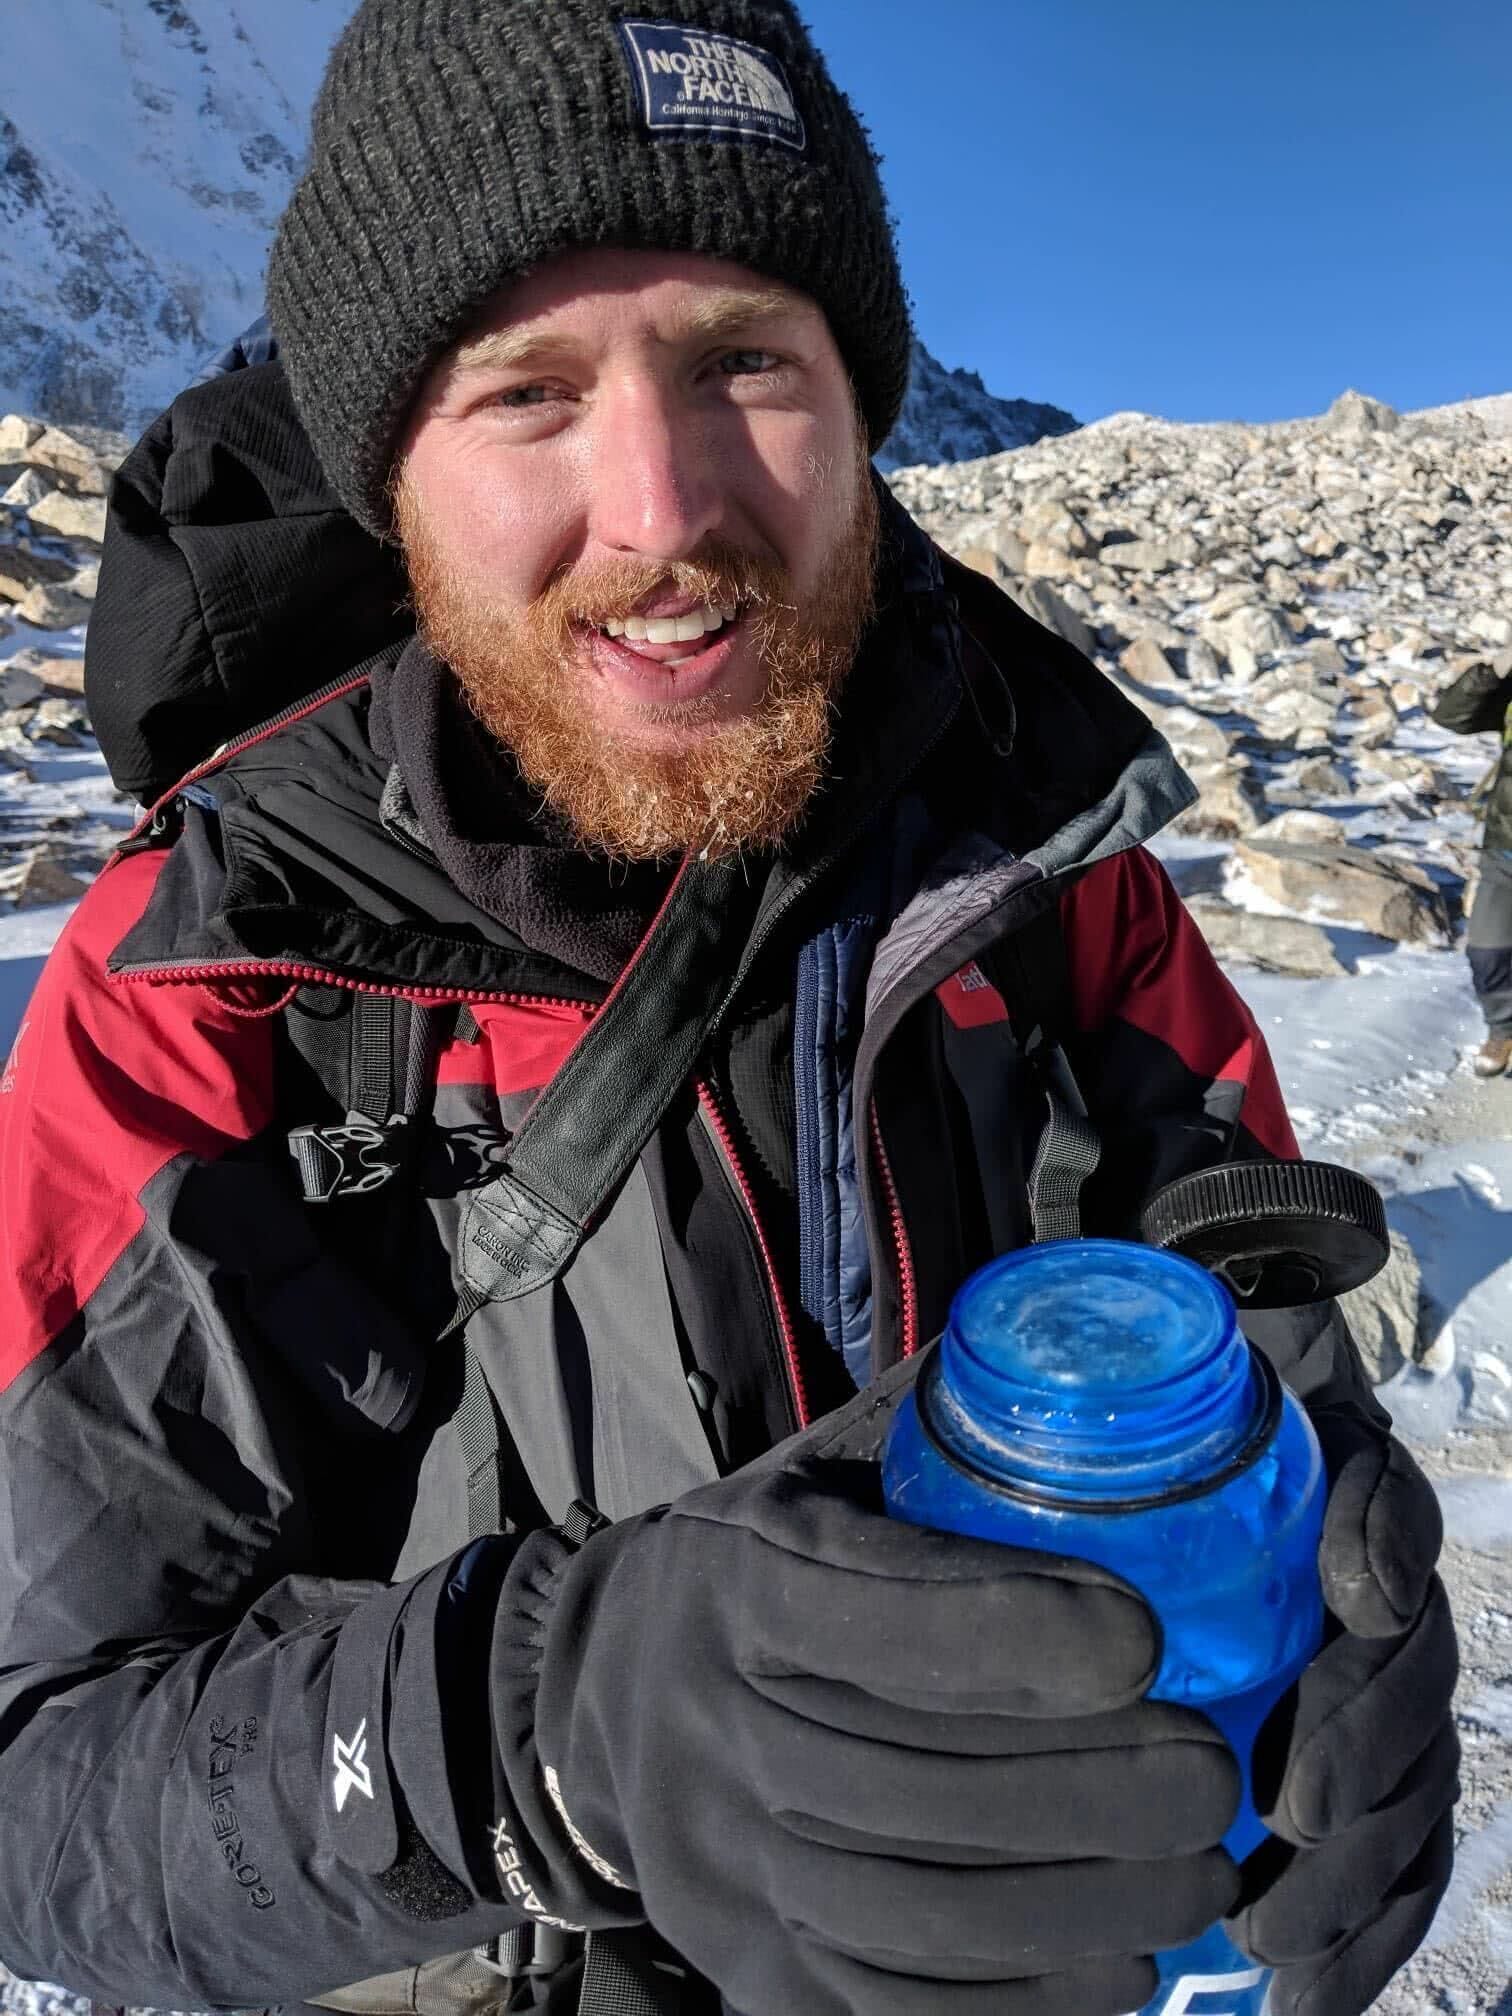 Tim with his frozen Nalgene water bottle